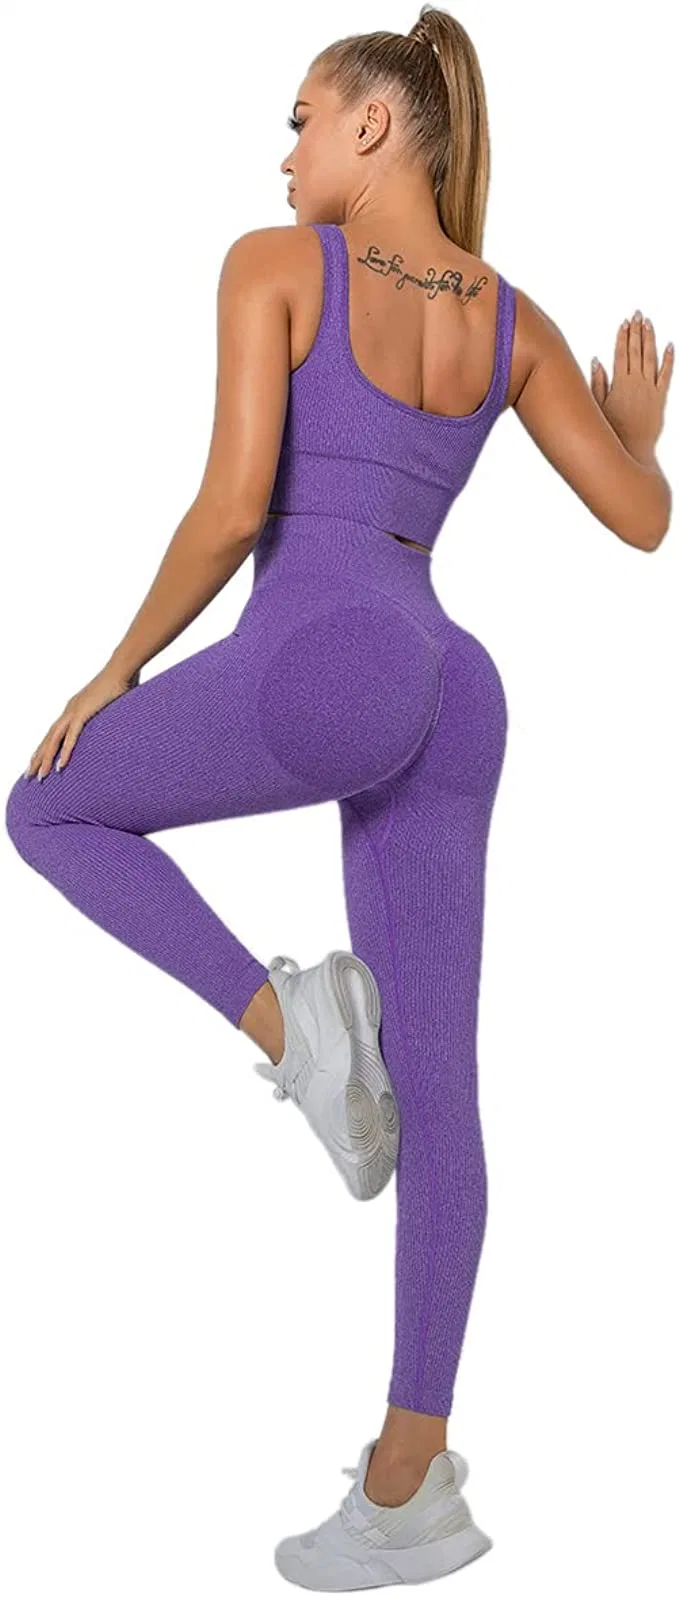 Фитнес-зал одежда йога одежда Sportswear для женщин